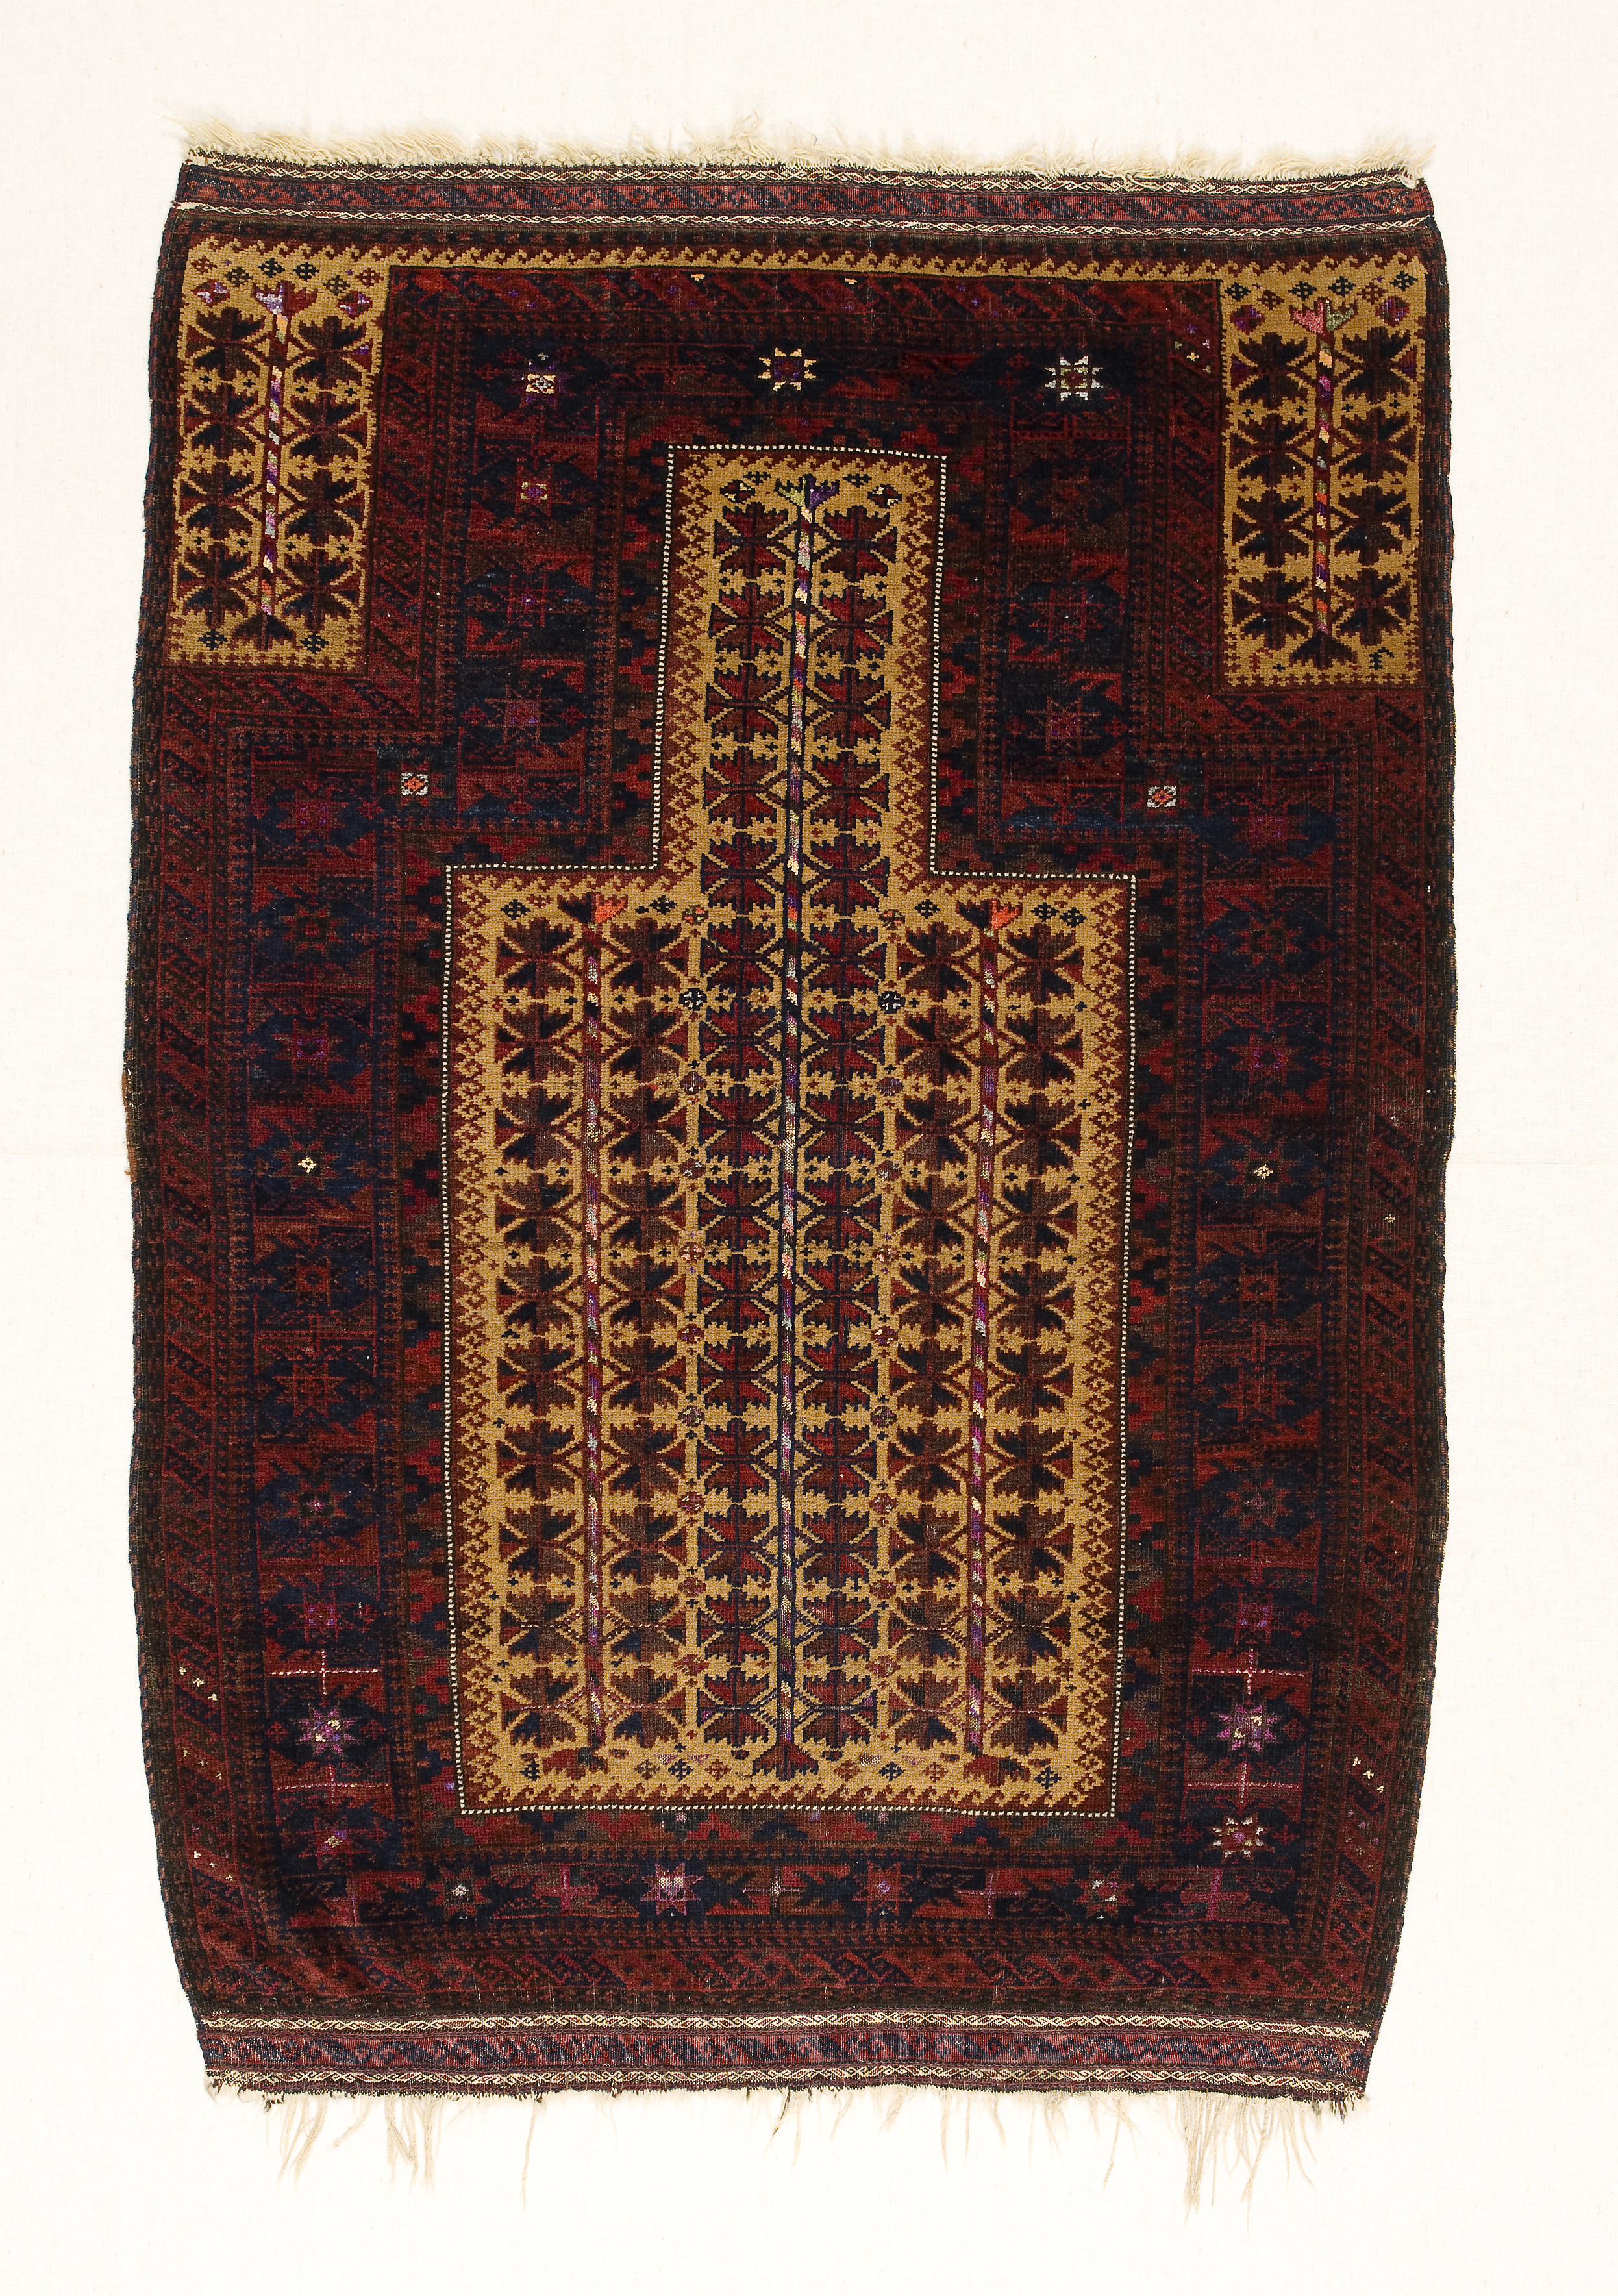 Baluchi prayer rug, northwest Afghanistan, late 1800s